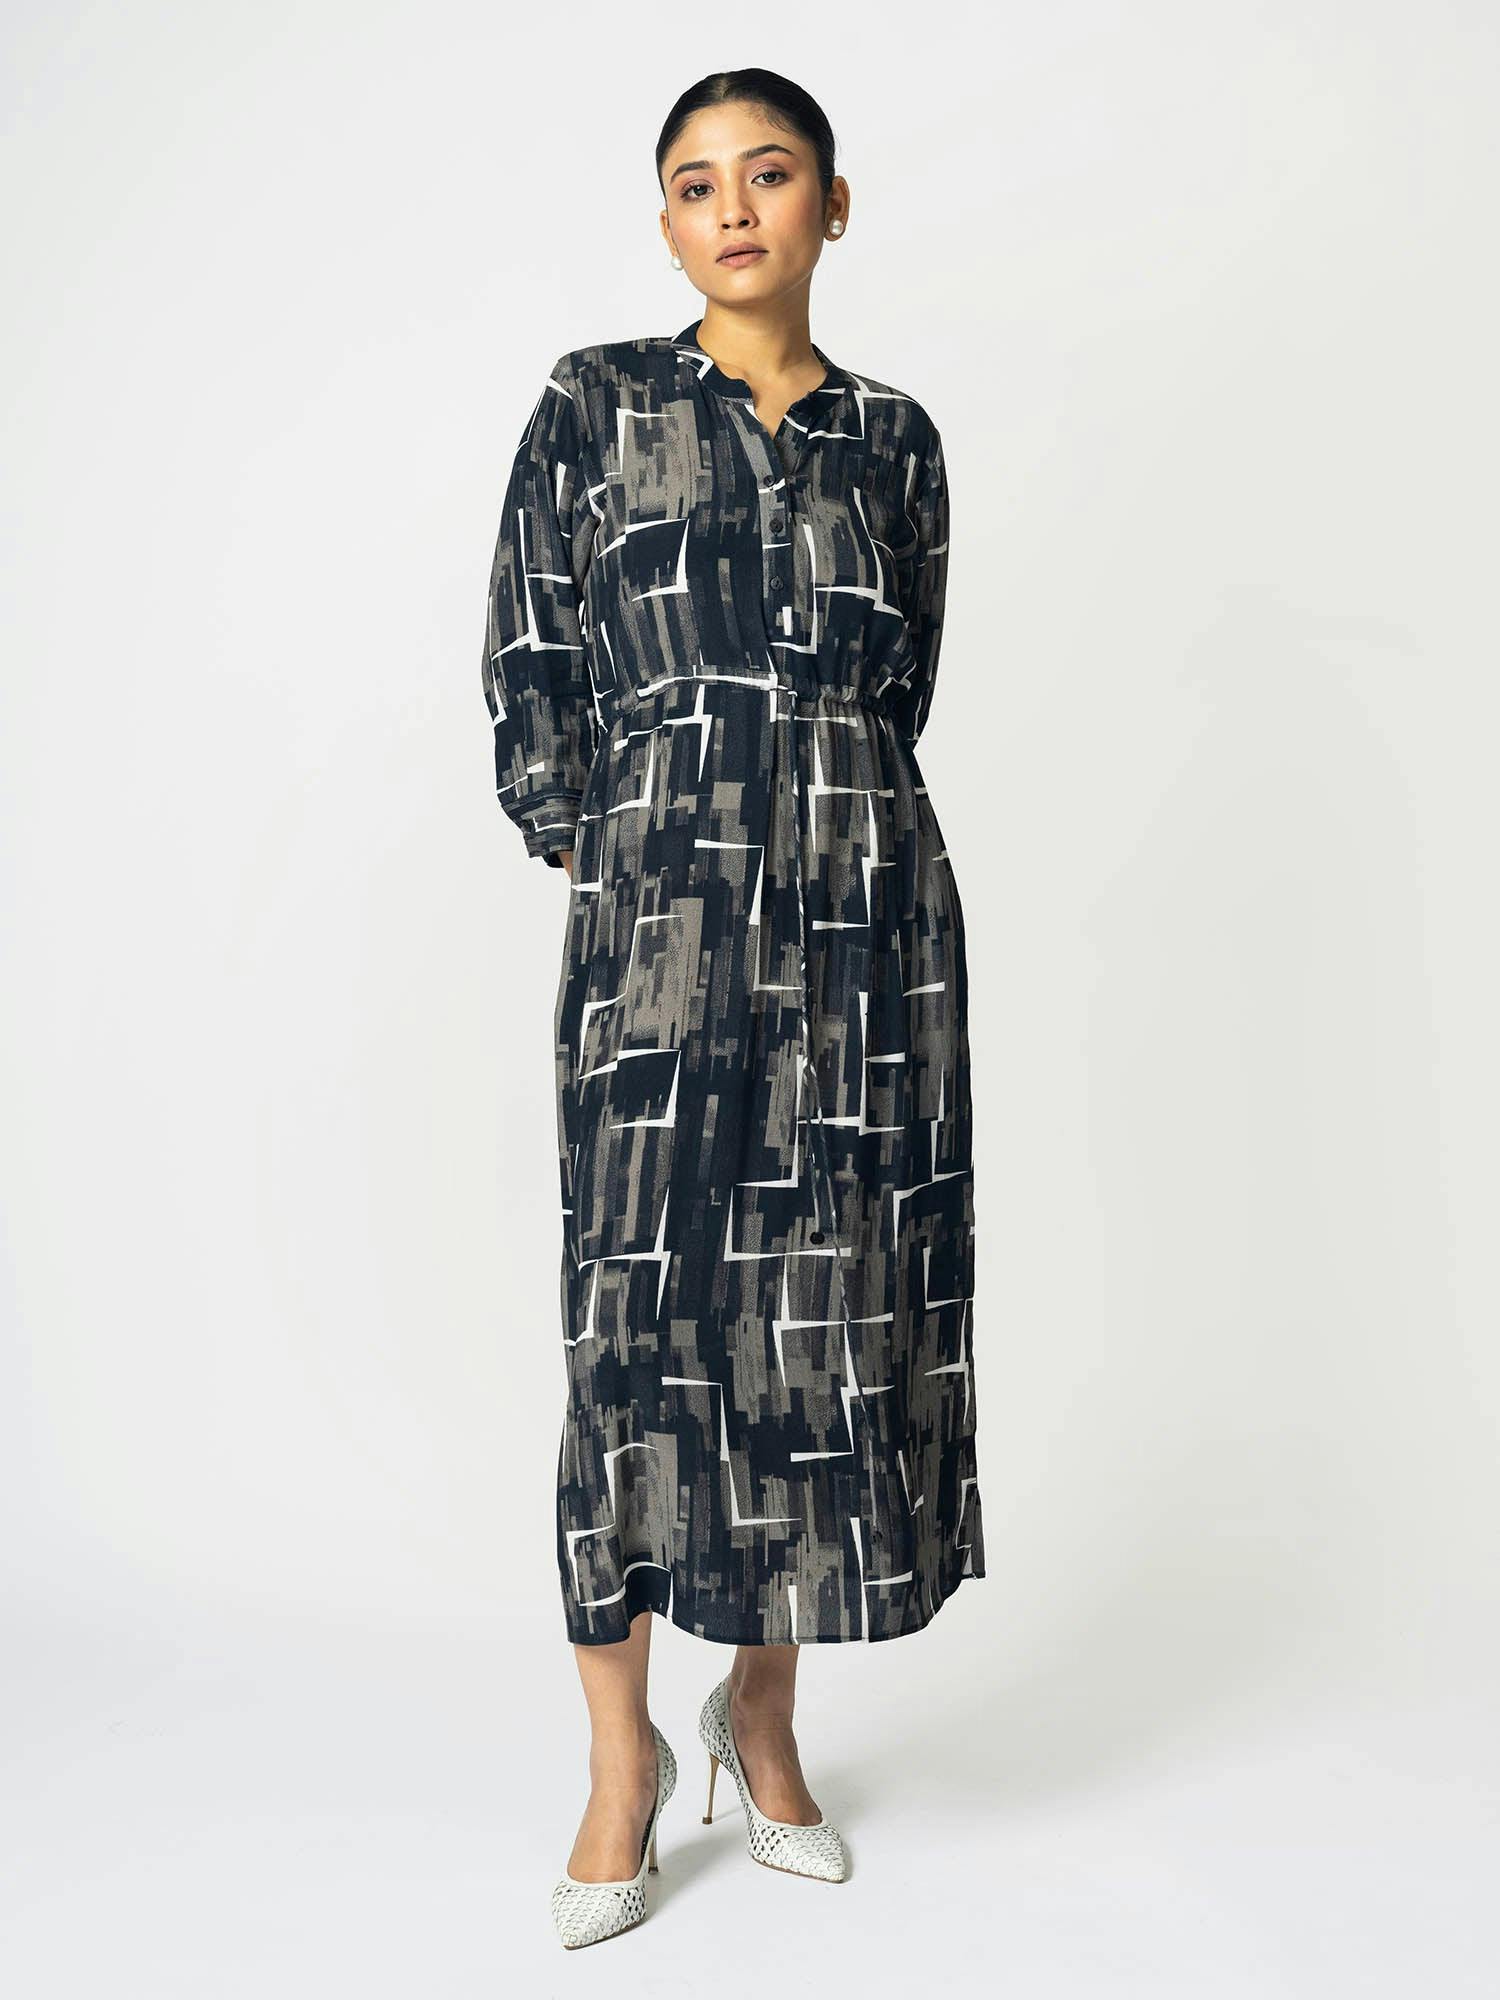 Brick Black Drawstring Dress, a product by KLAD